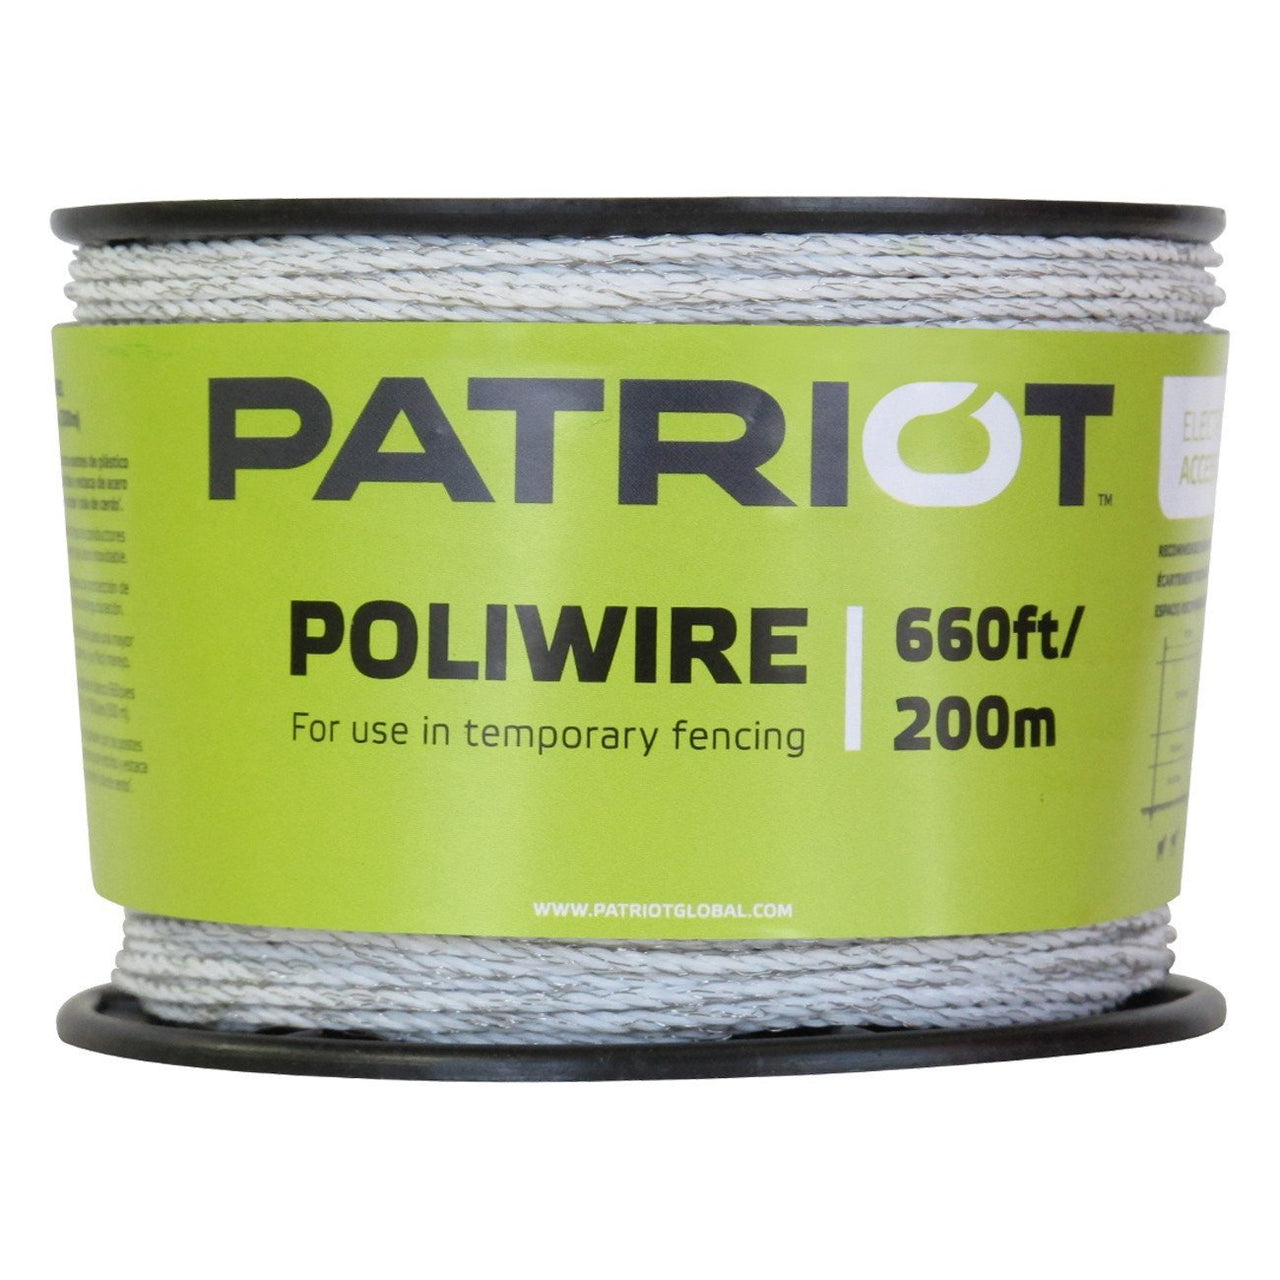 Patriot Poliwire - 660 White - Fencing Patriot - Canada